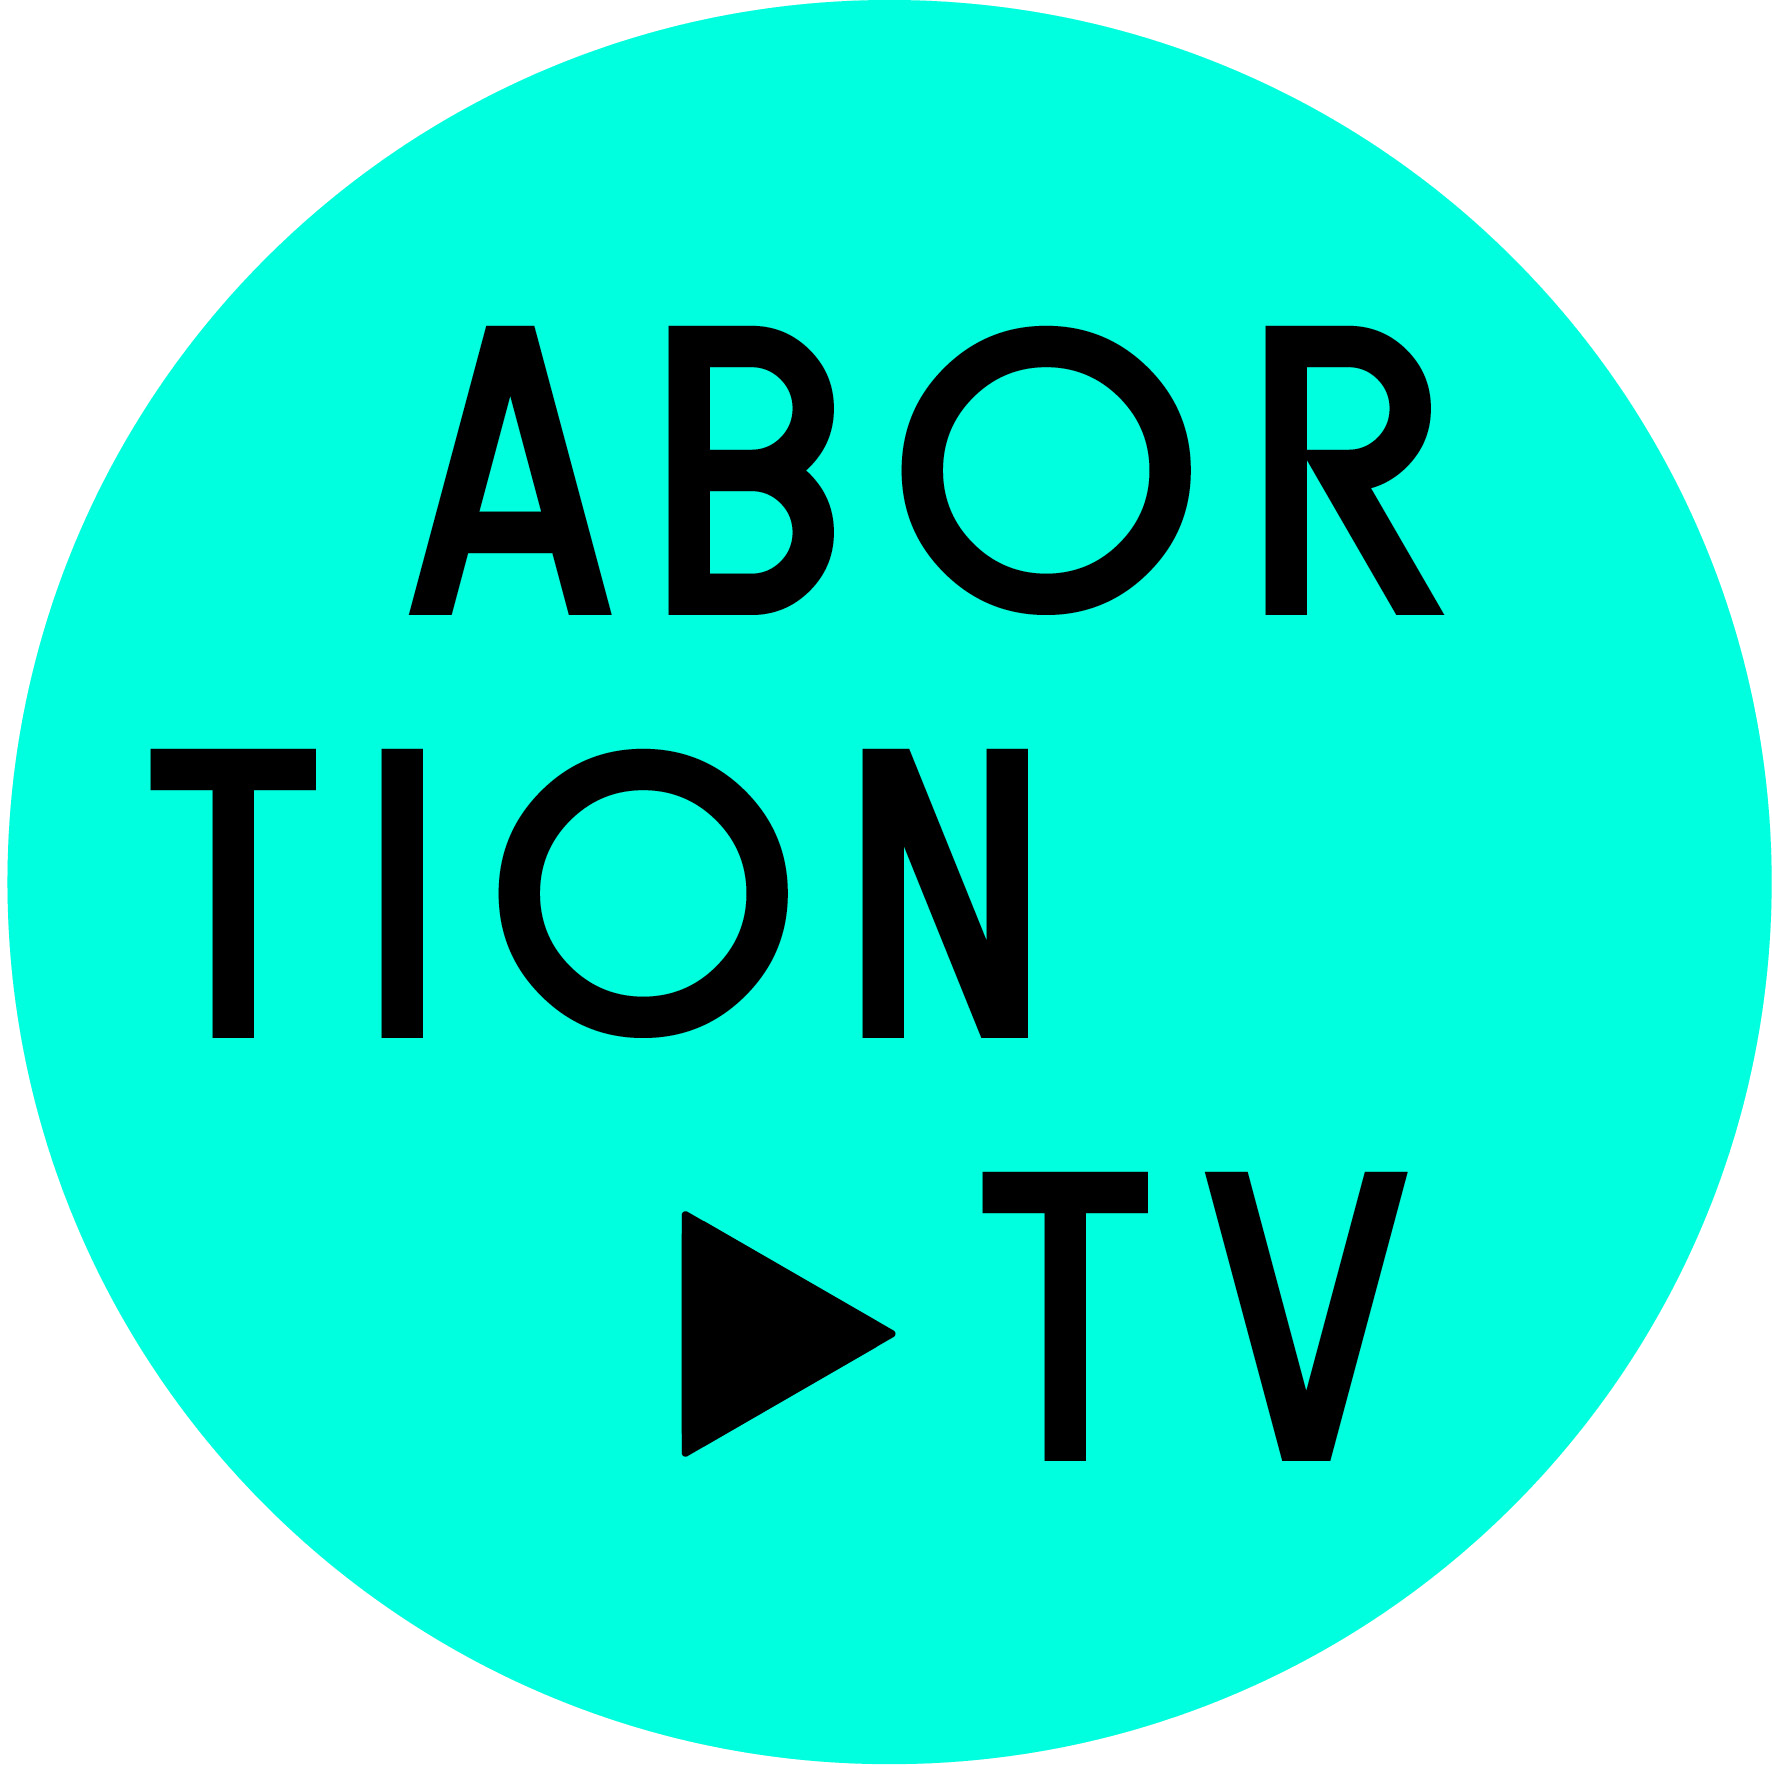 abortion.tv info